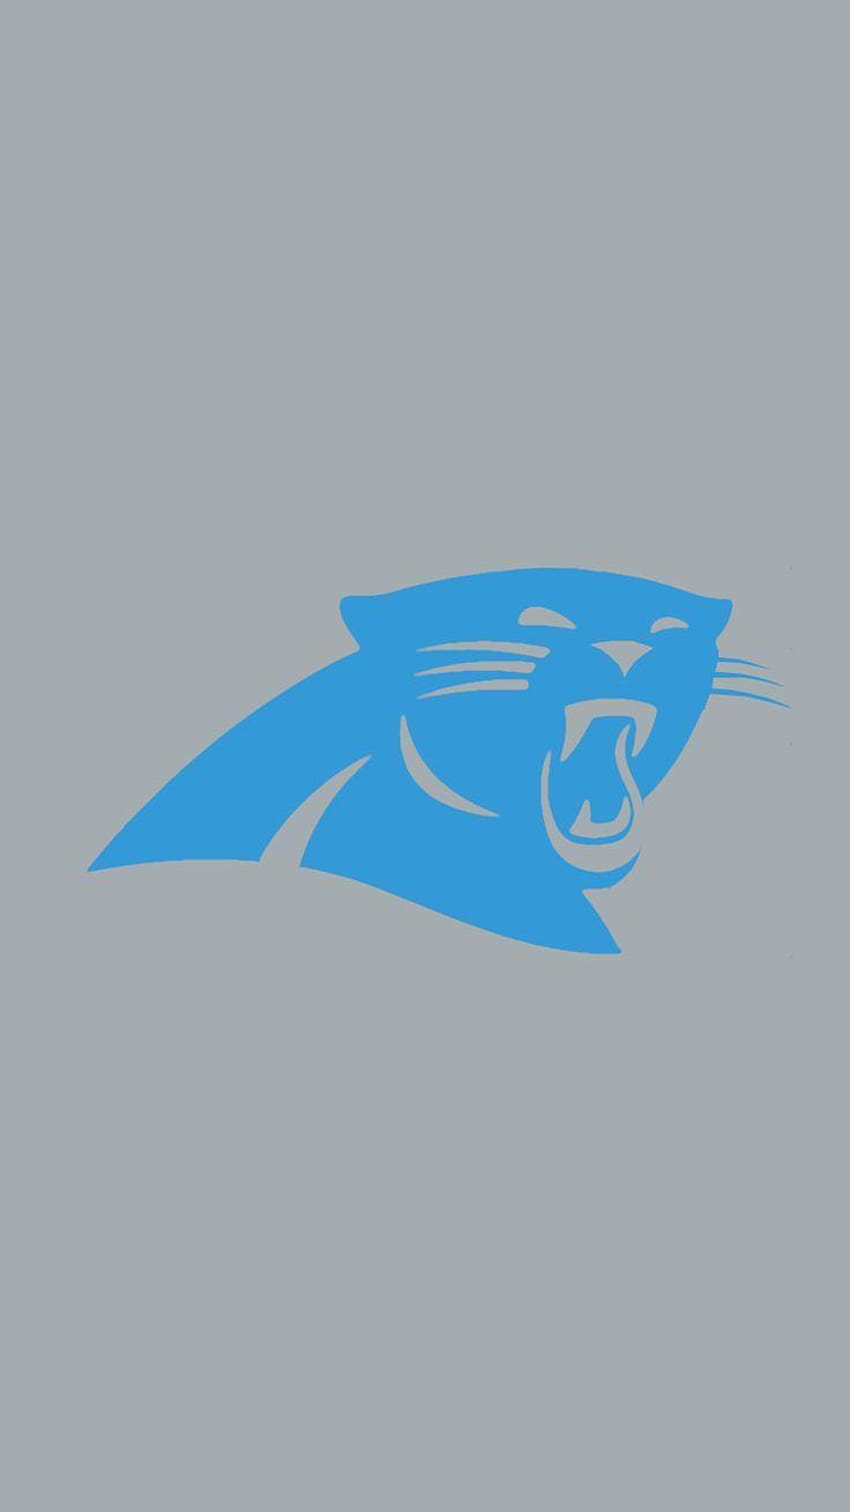 Panthers DE Brian Burns selected for NFL Pro Bowl | wcnc.com